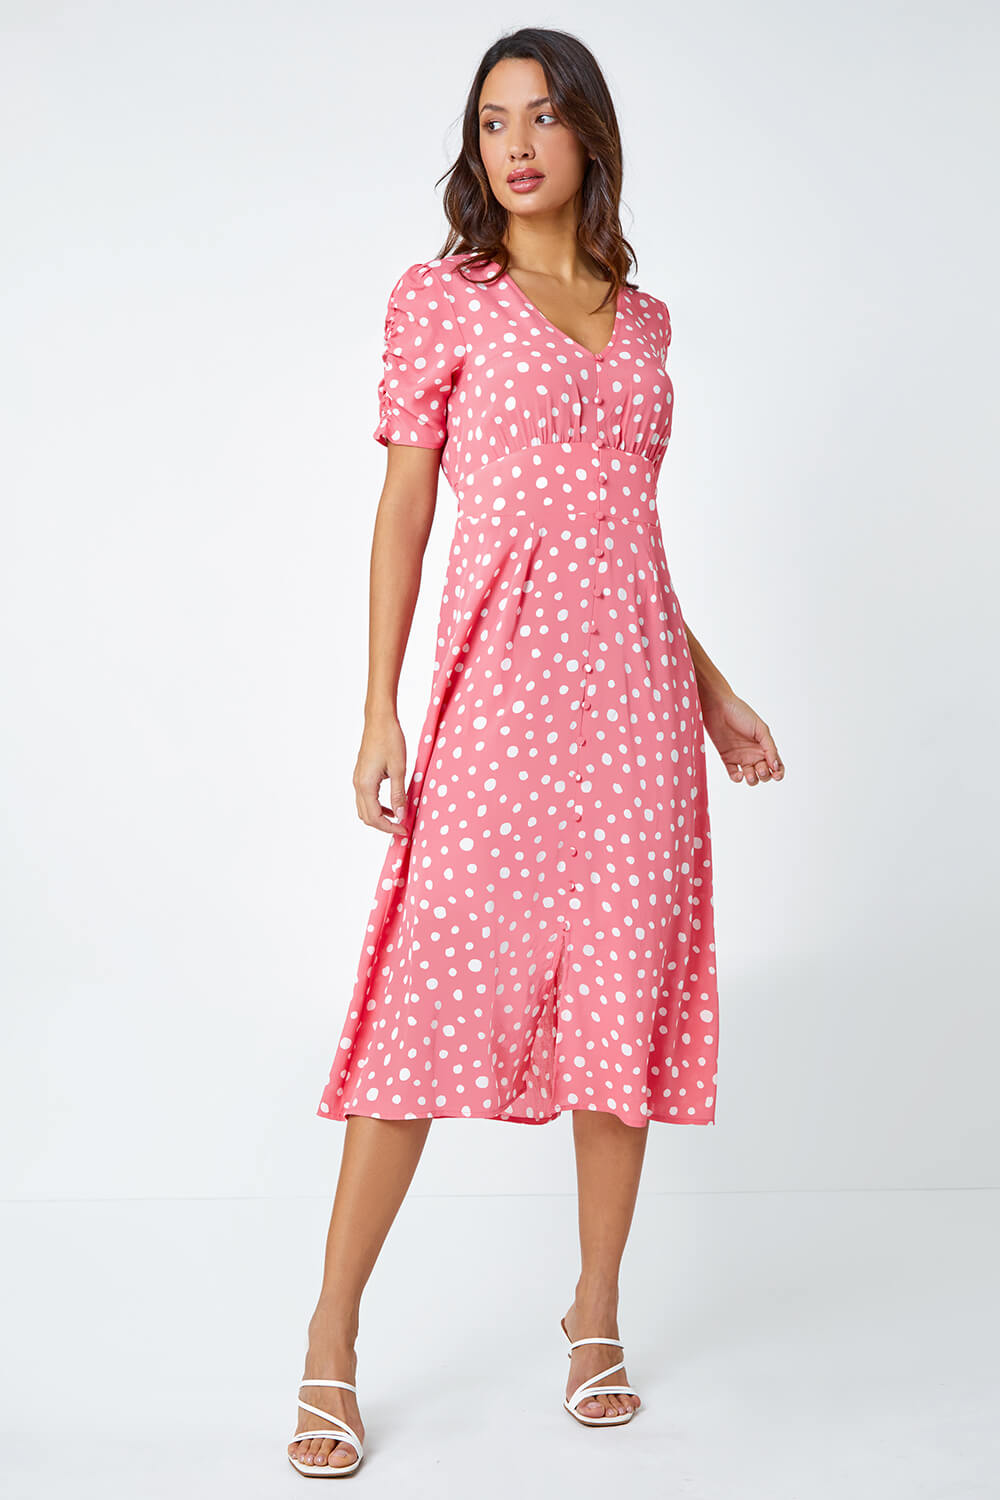 PINK Polka Dot Ruched Sleeve Midi Dress, Image 2 of 5